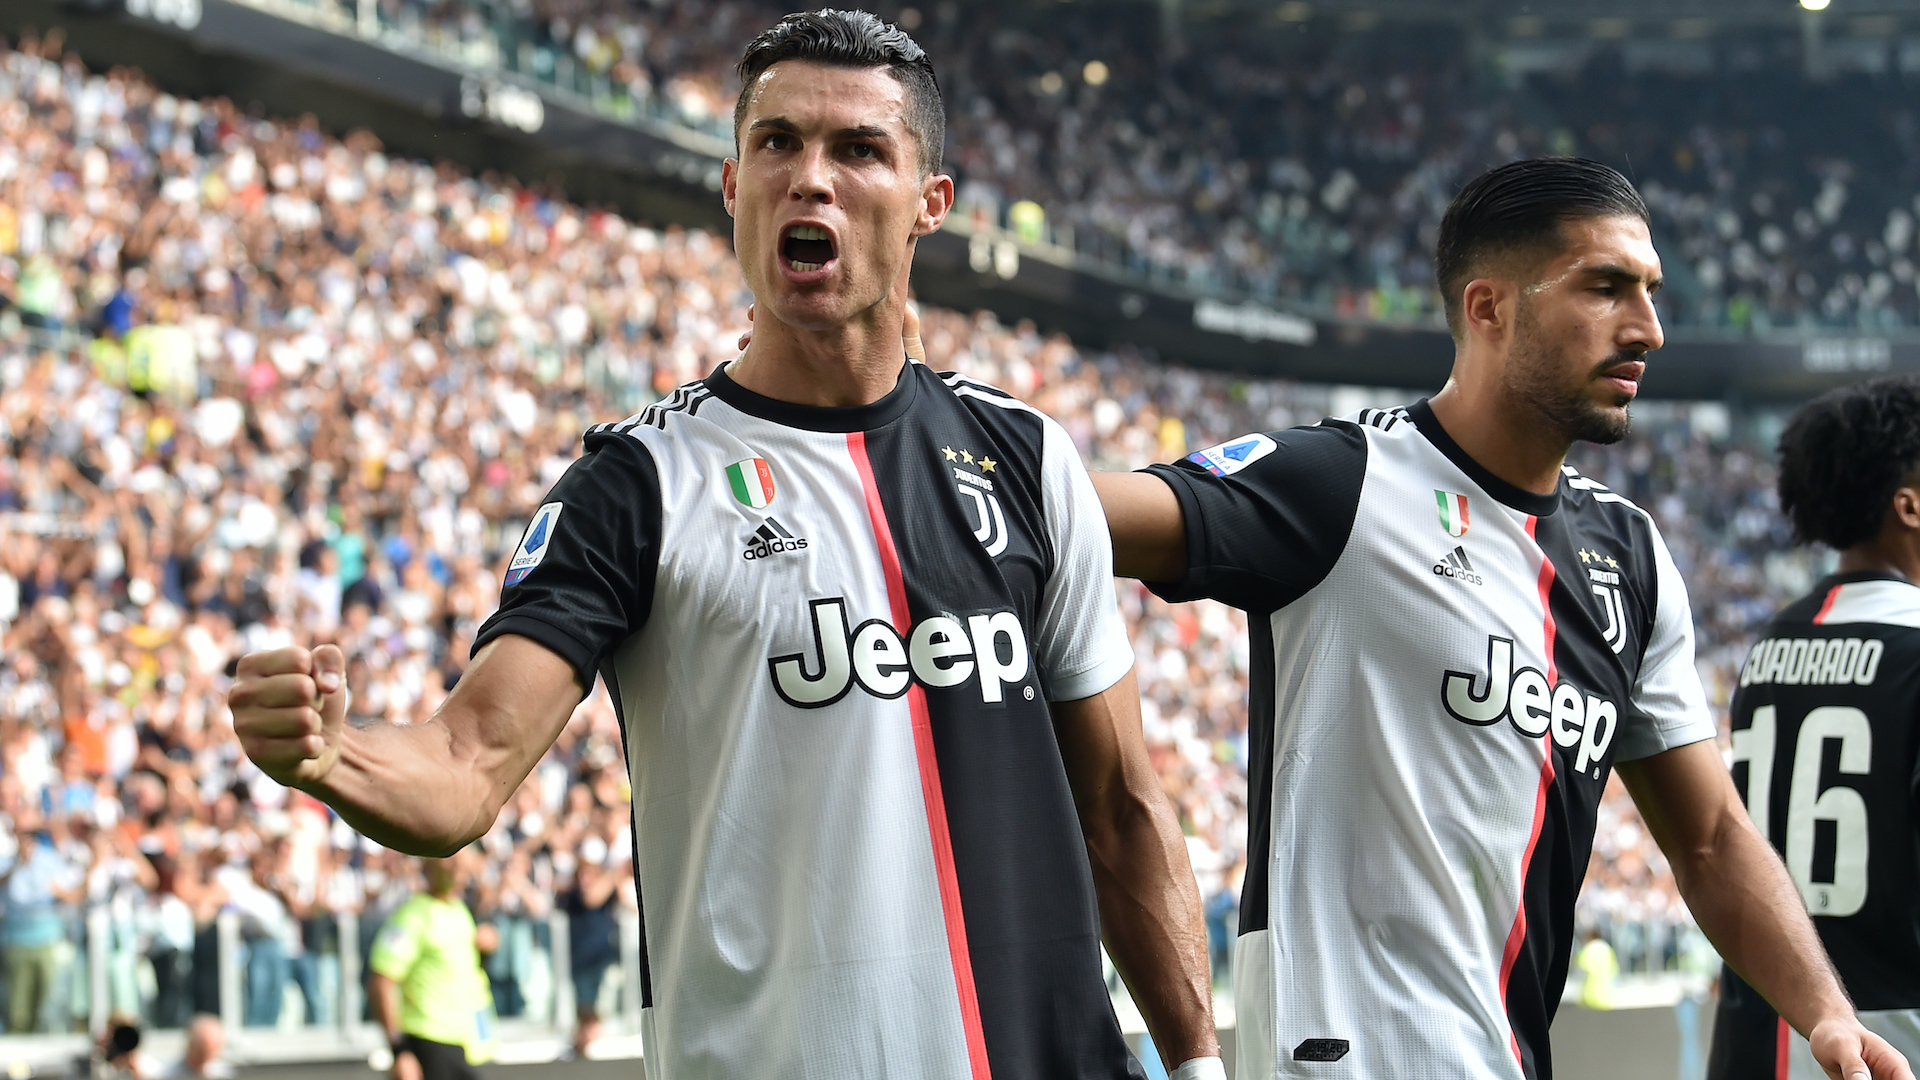 Cristiano Ronaldo of Juventus celebrates after scoring a goal in 2019